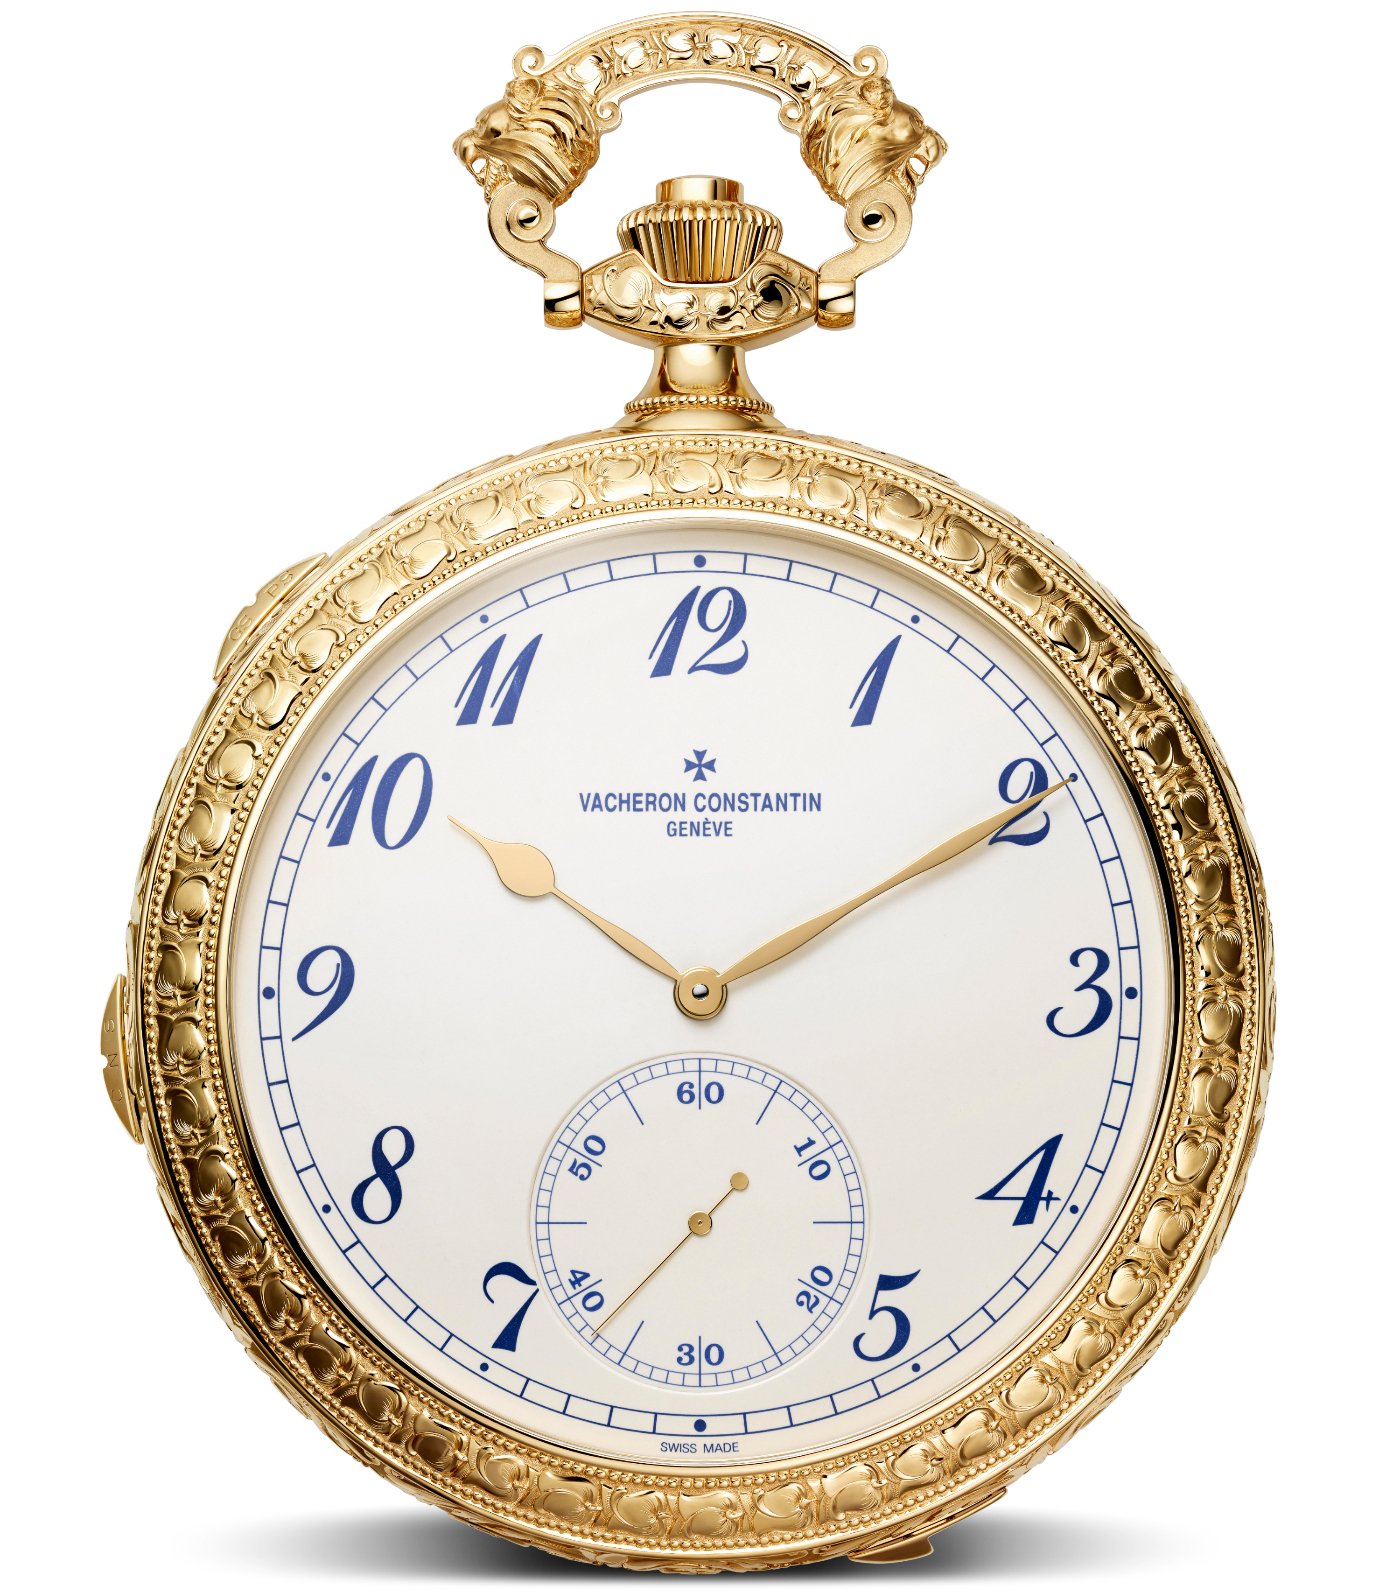 Vacheron Constantin unveils an exceptional bespoke pocket watch